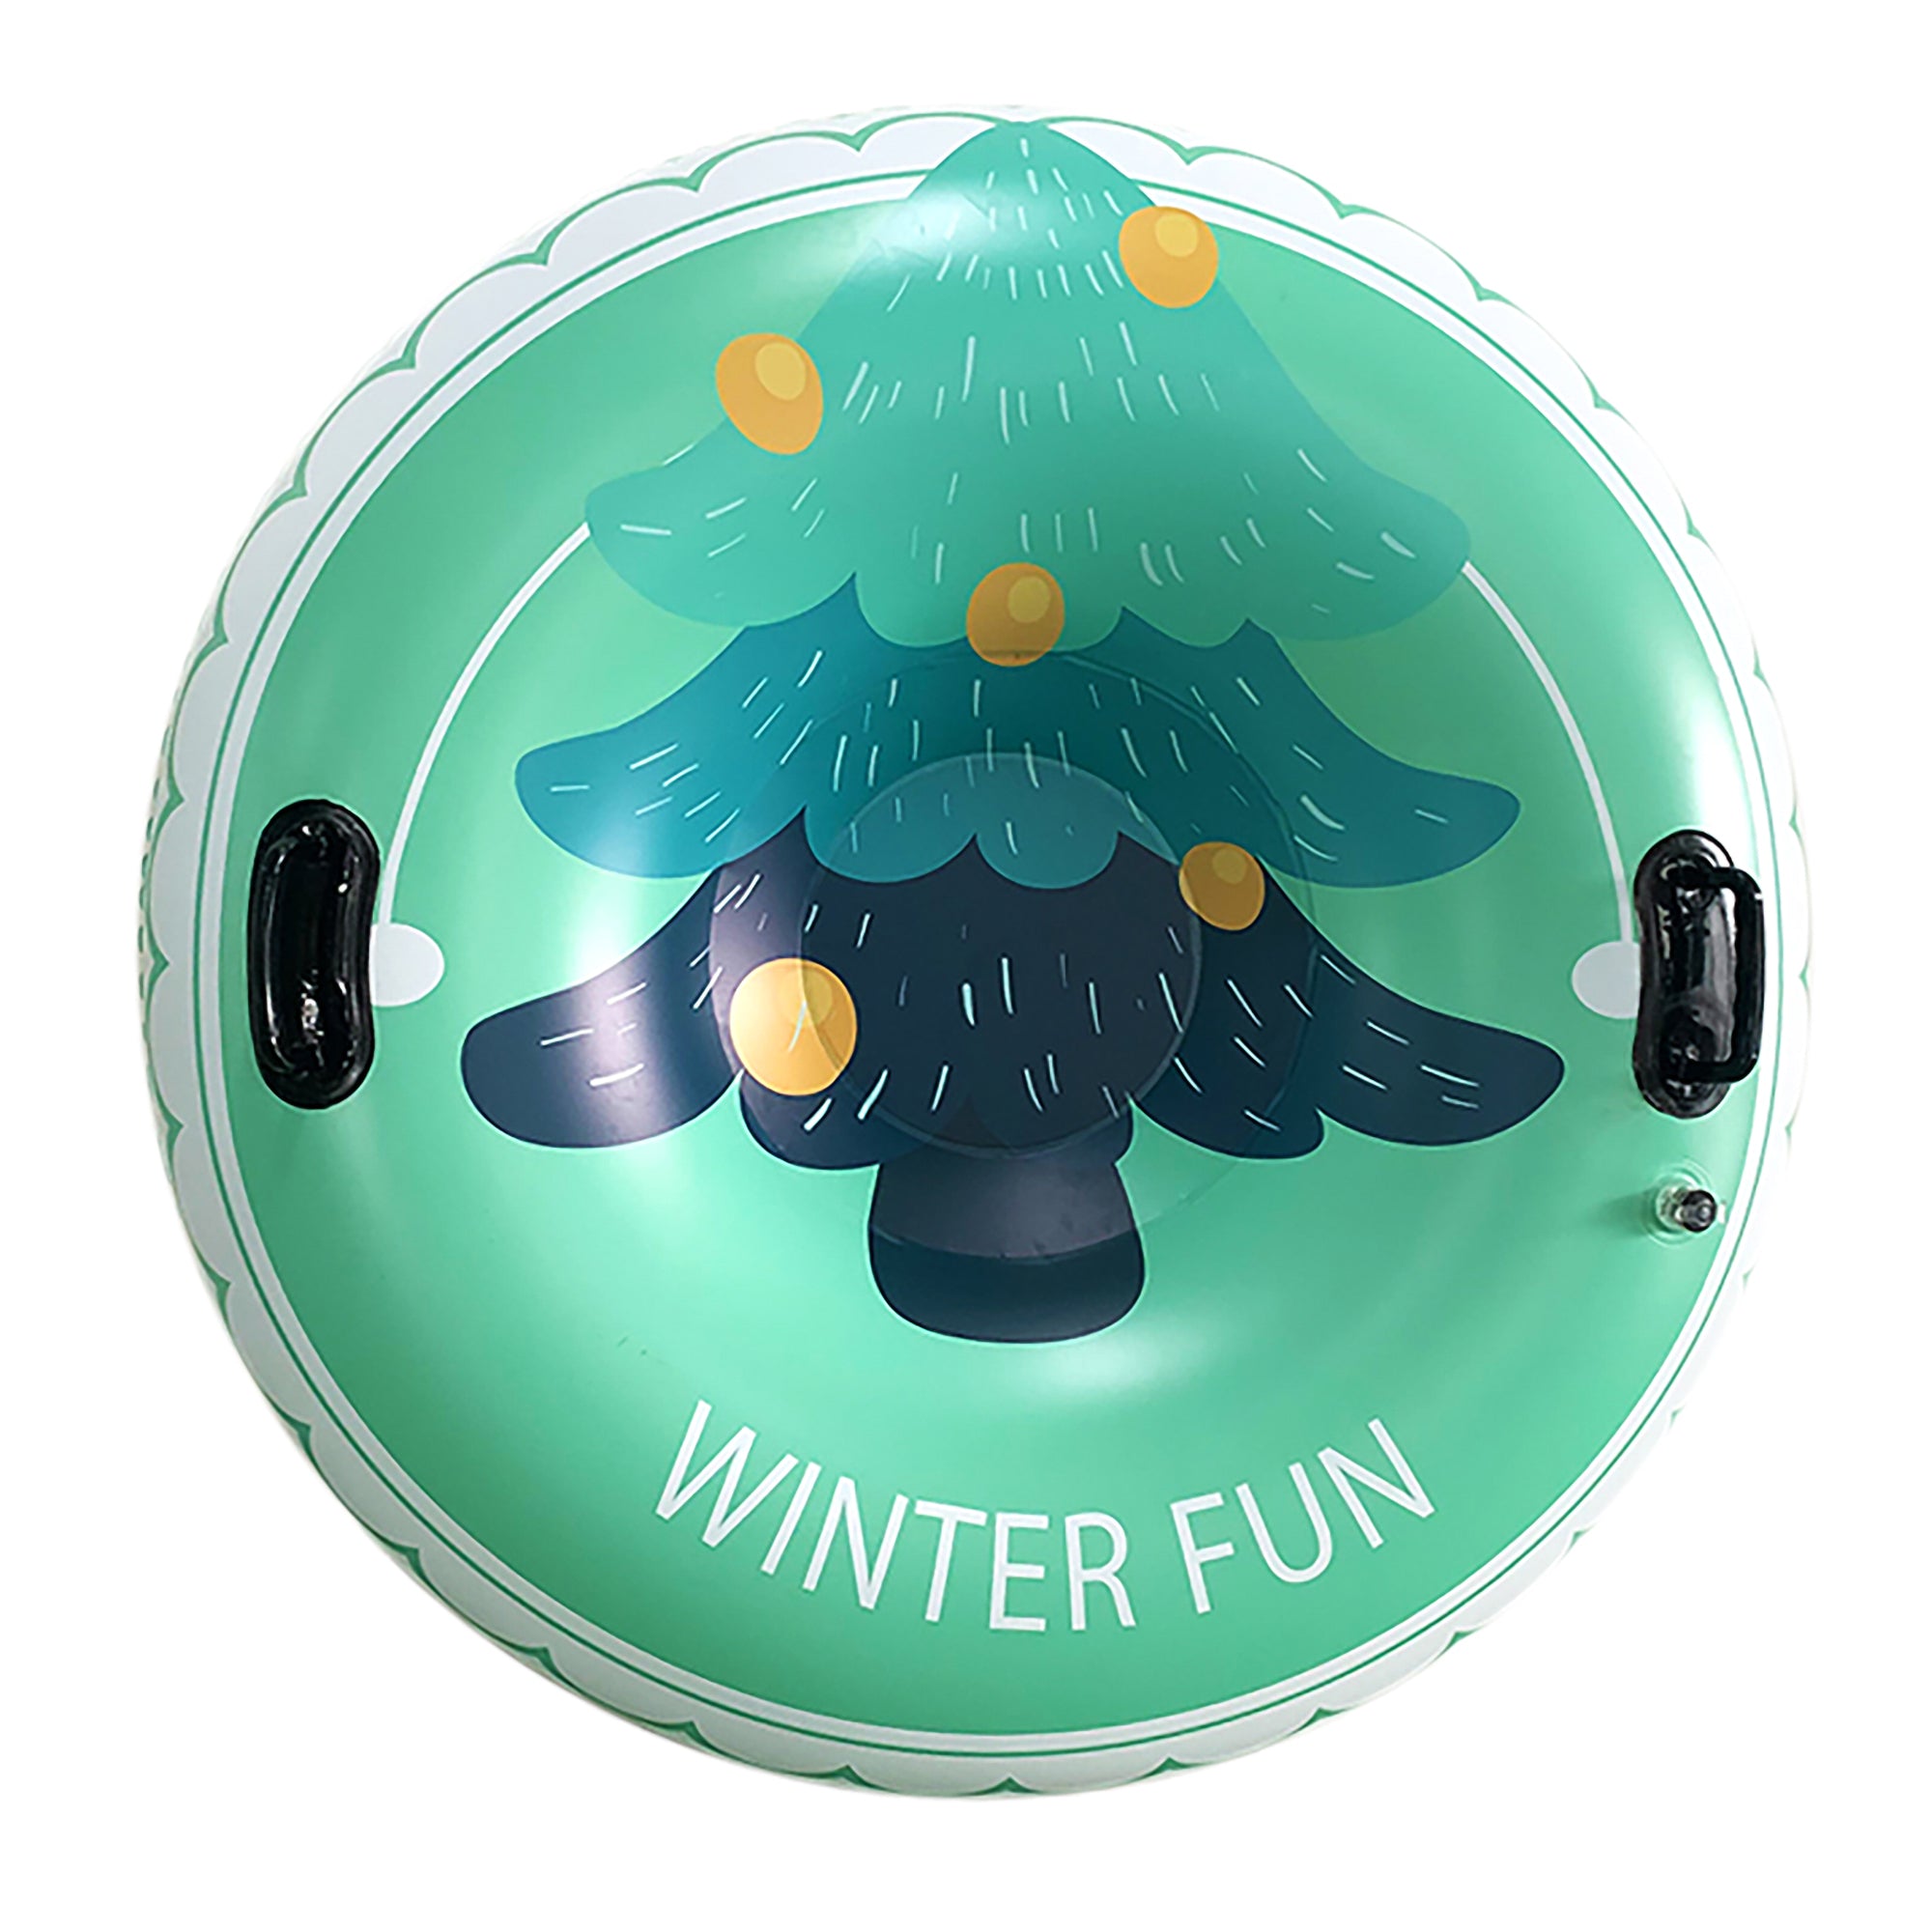 ''Winter Fun Inflatable Snow Tube 36''''''